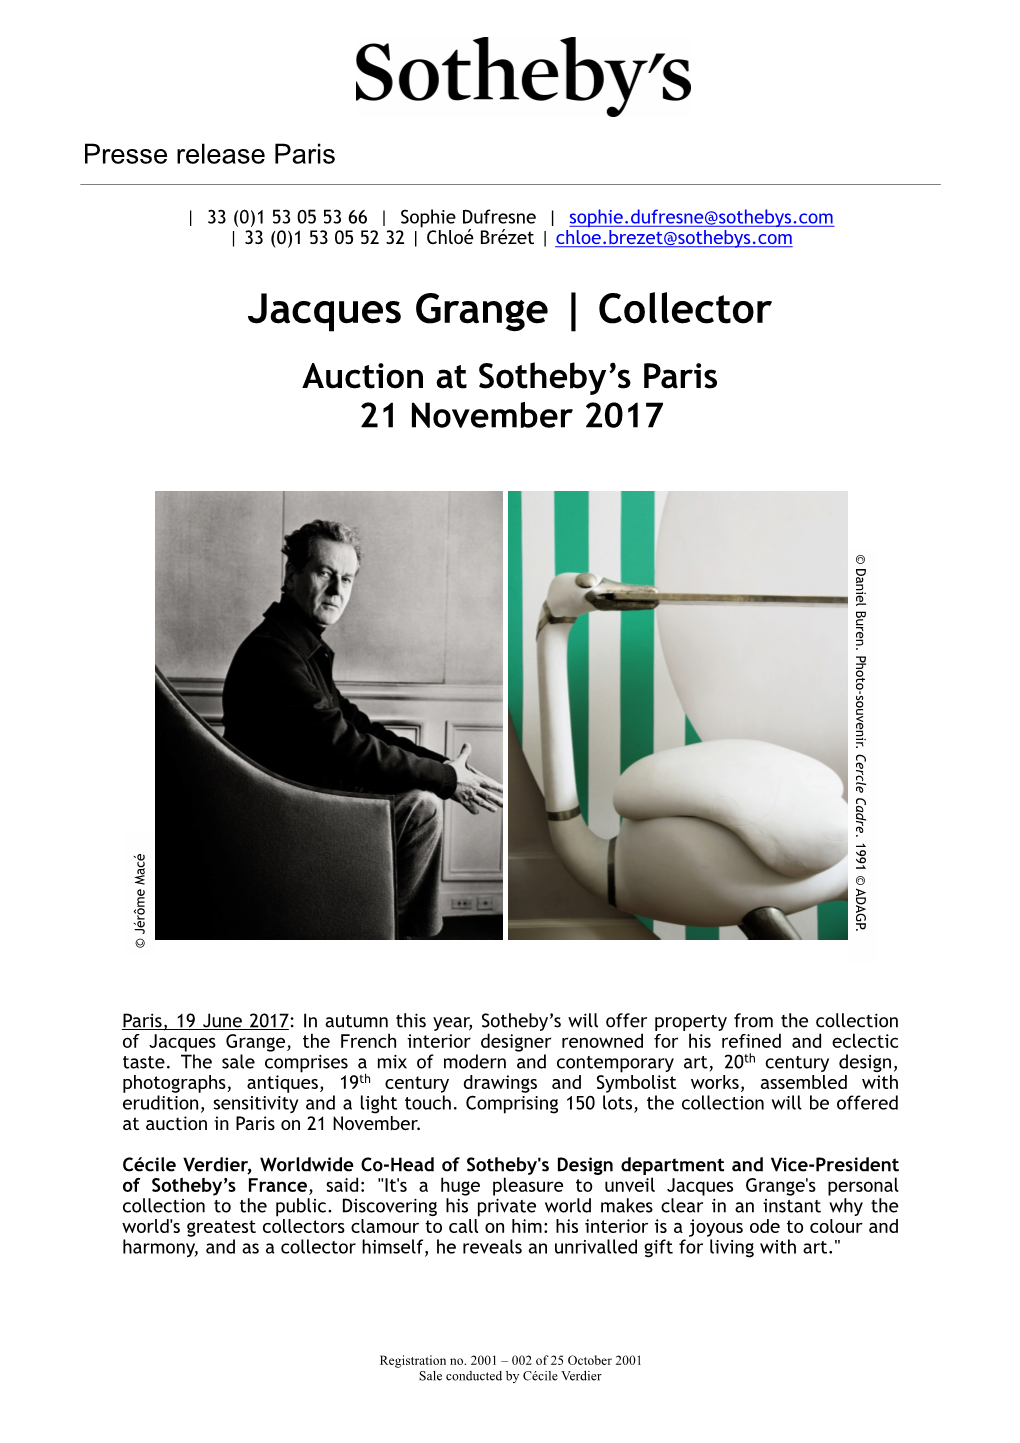 Jacques Grange | Collector Auction at Sotheby’S Paris 21 November 2017